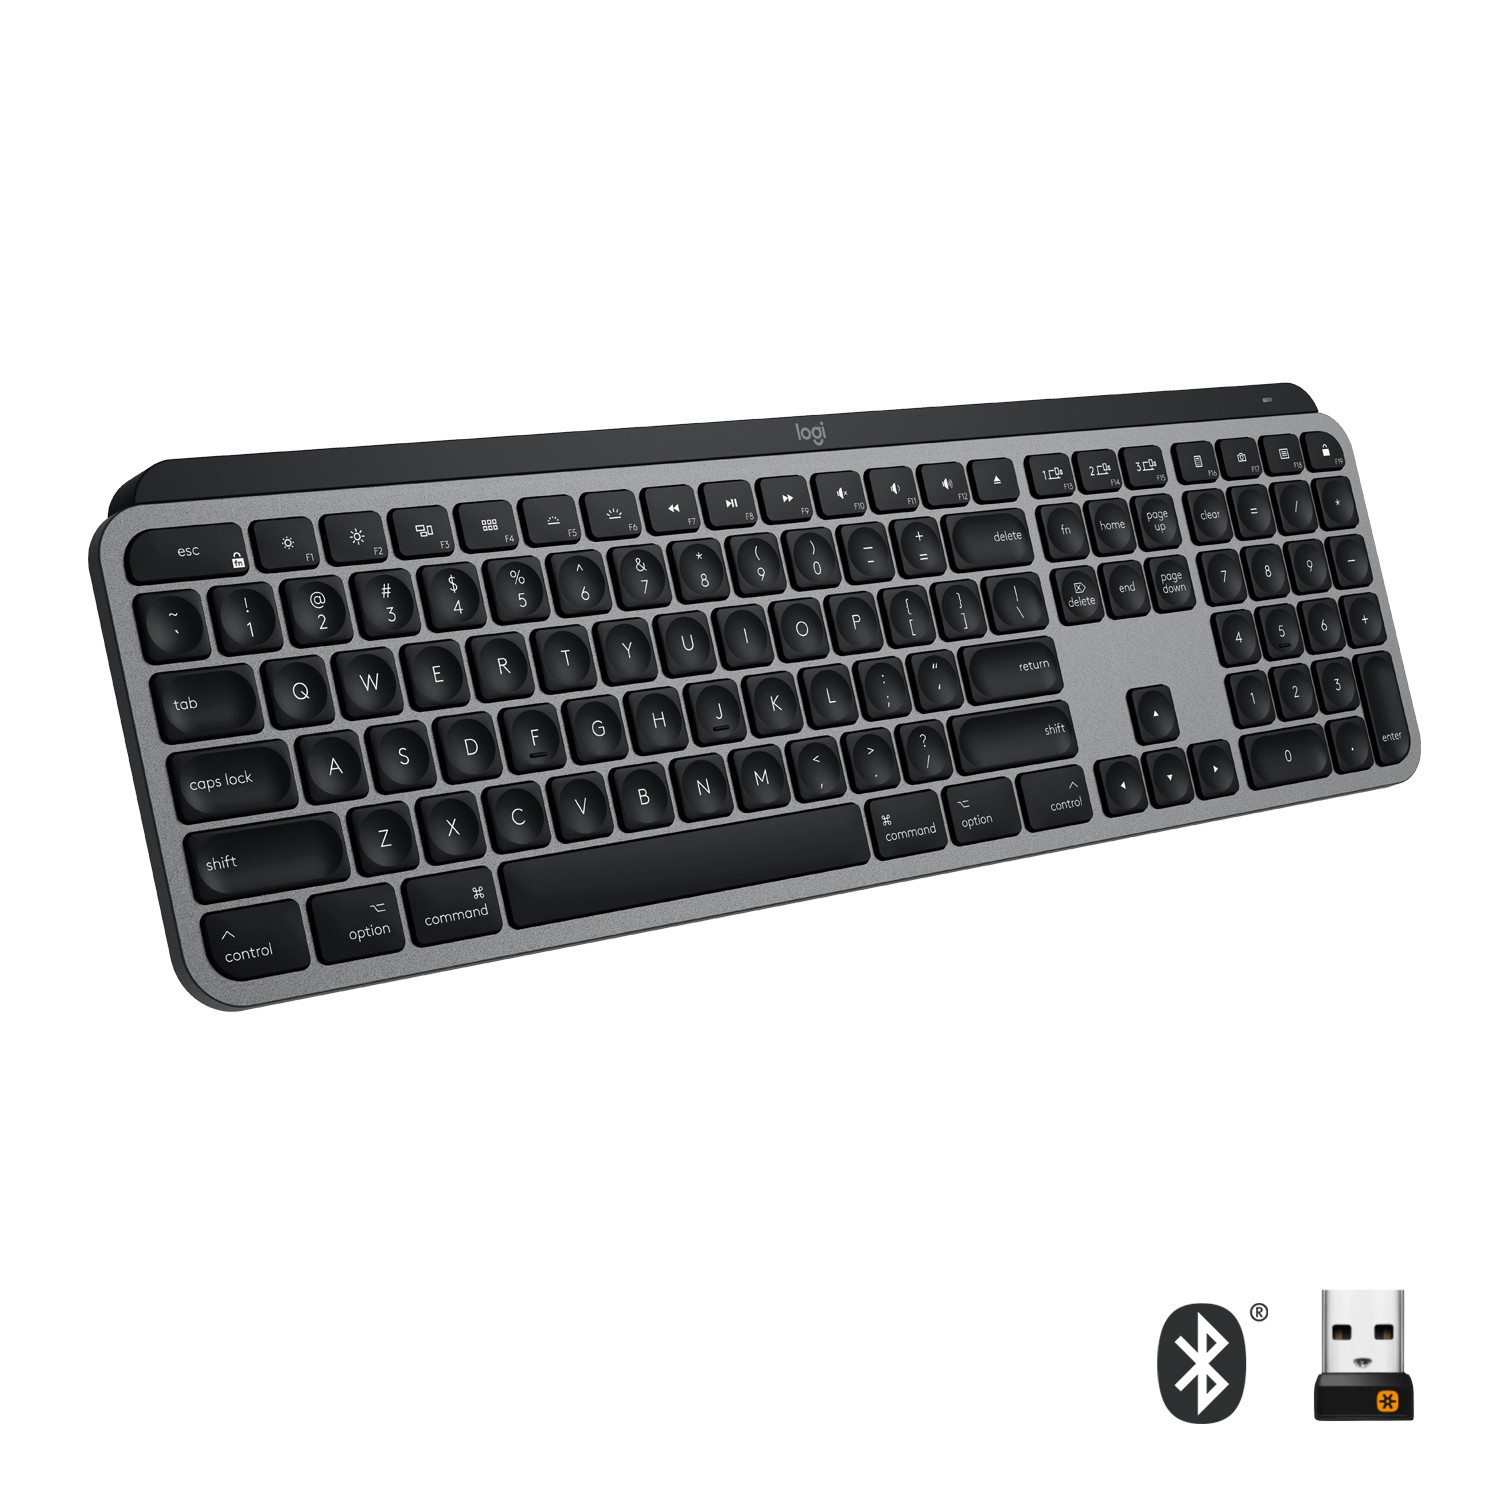  MX Keys for Mac Advanced Wireless Illuminated Keyboard - SPACE GREY - US INTL - EMEA